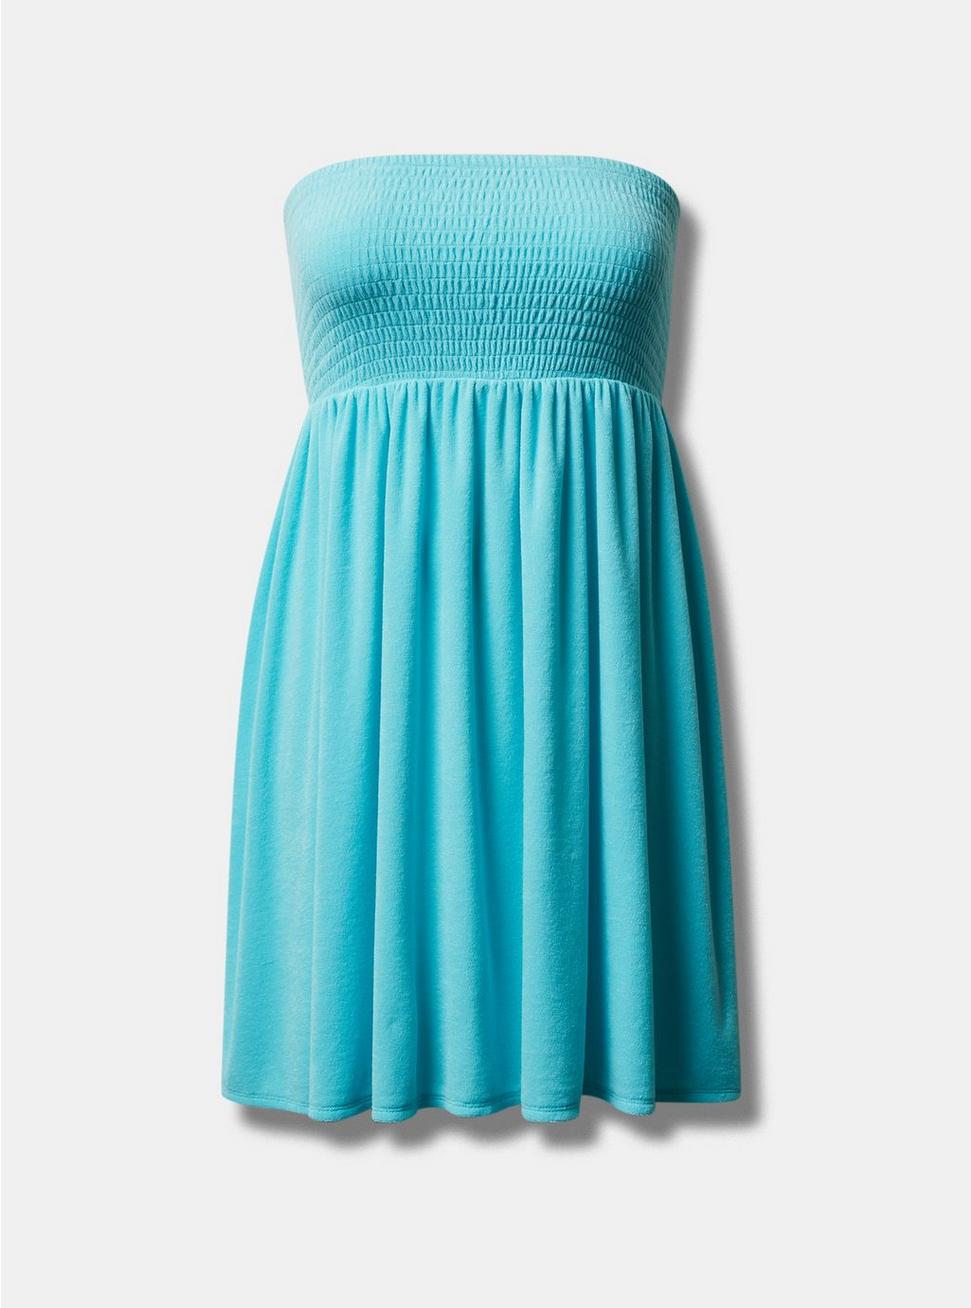 Mini Terry Cloth Smocked Strapless Beach Dress, BLUE RADIANCE, hi-res